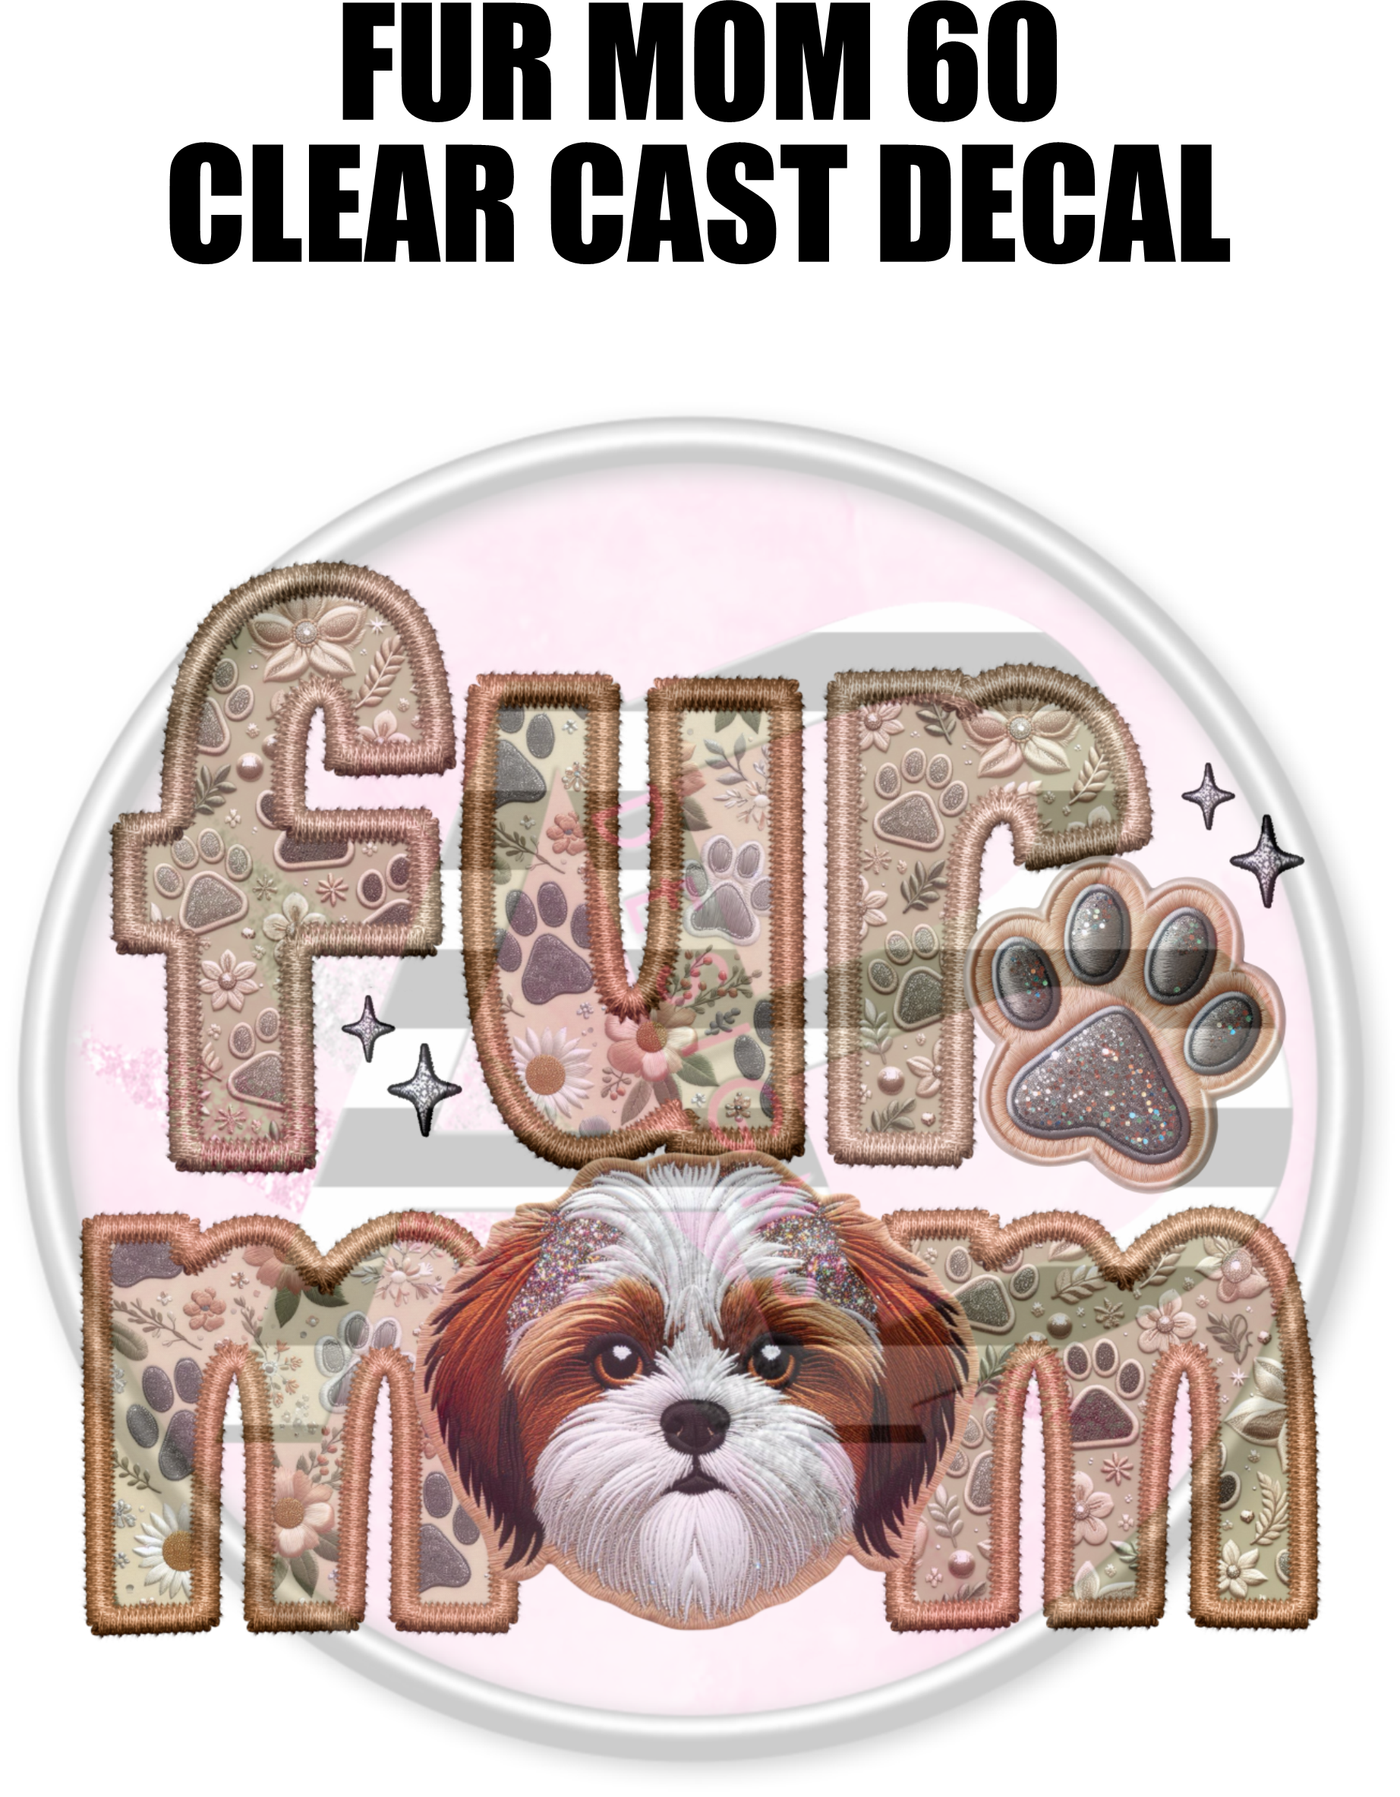 Fur Mom 60 - Clear Cast Decal